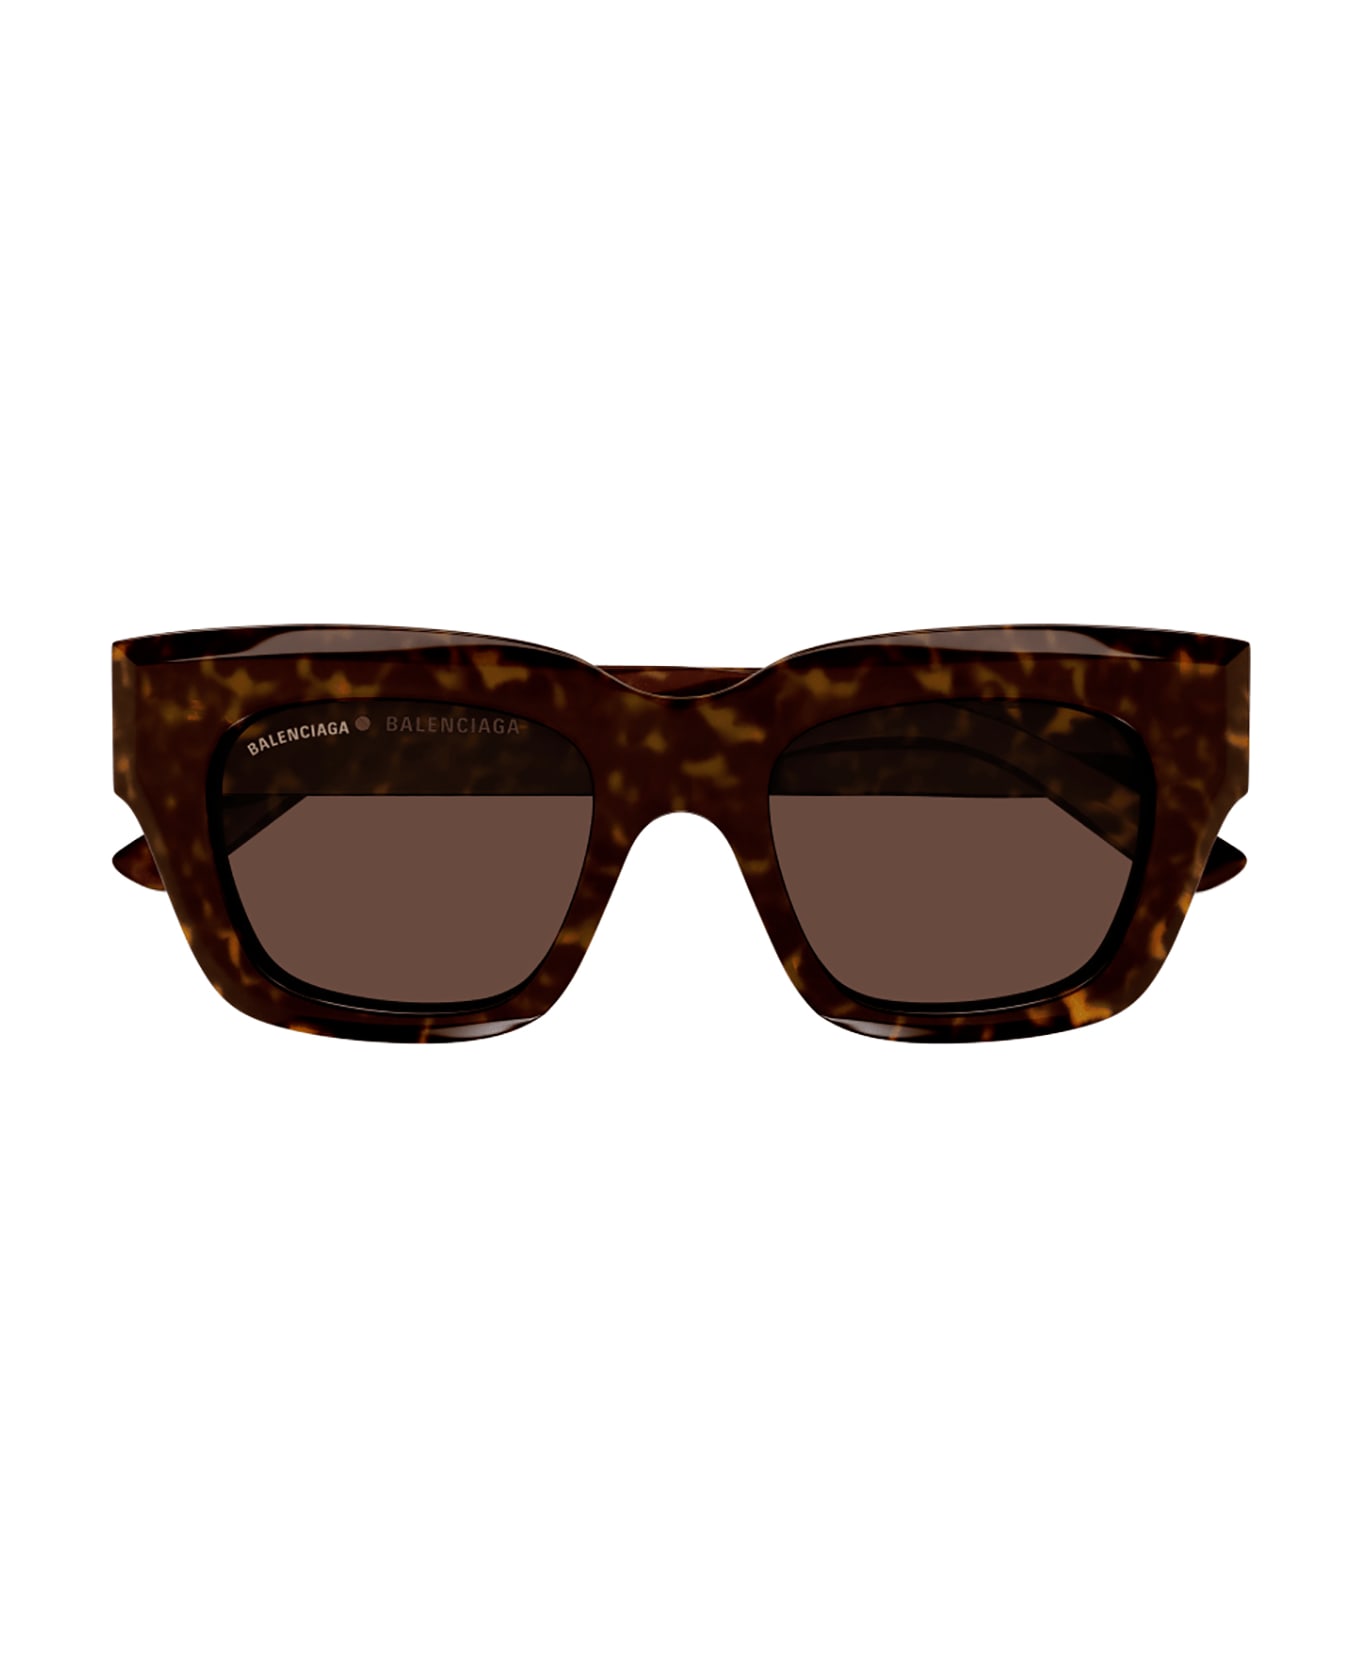 Balenciaga Eyewear BB0234S Sunglasses - Havana Havana Brown